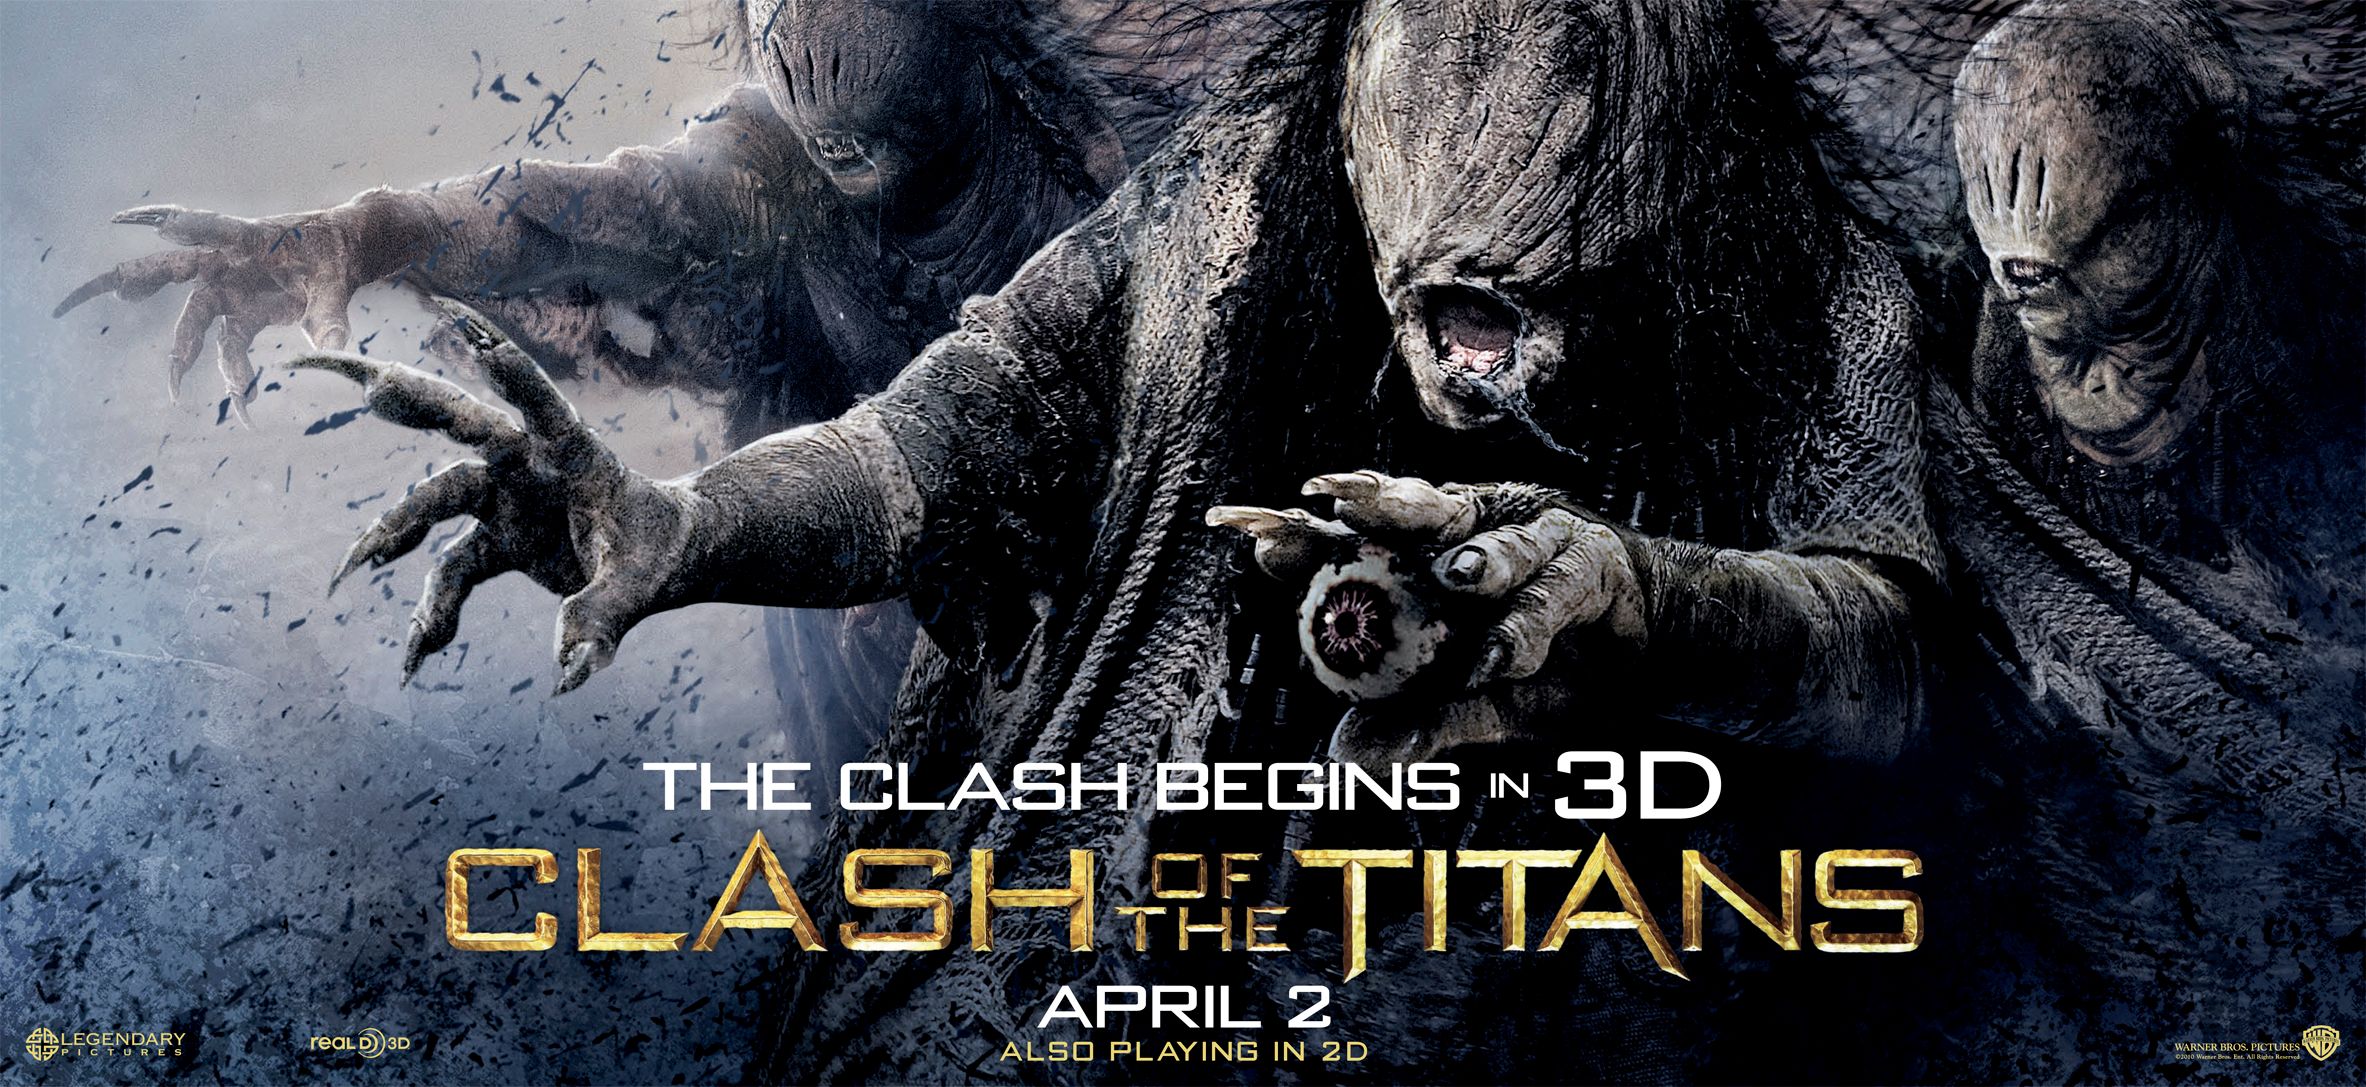 Clash Of The Titans 2 Starts Next Feb, Movies